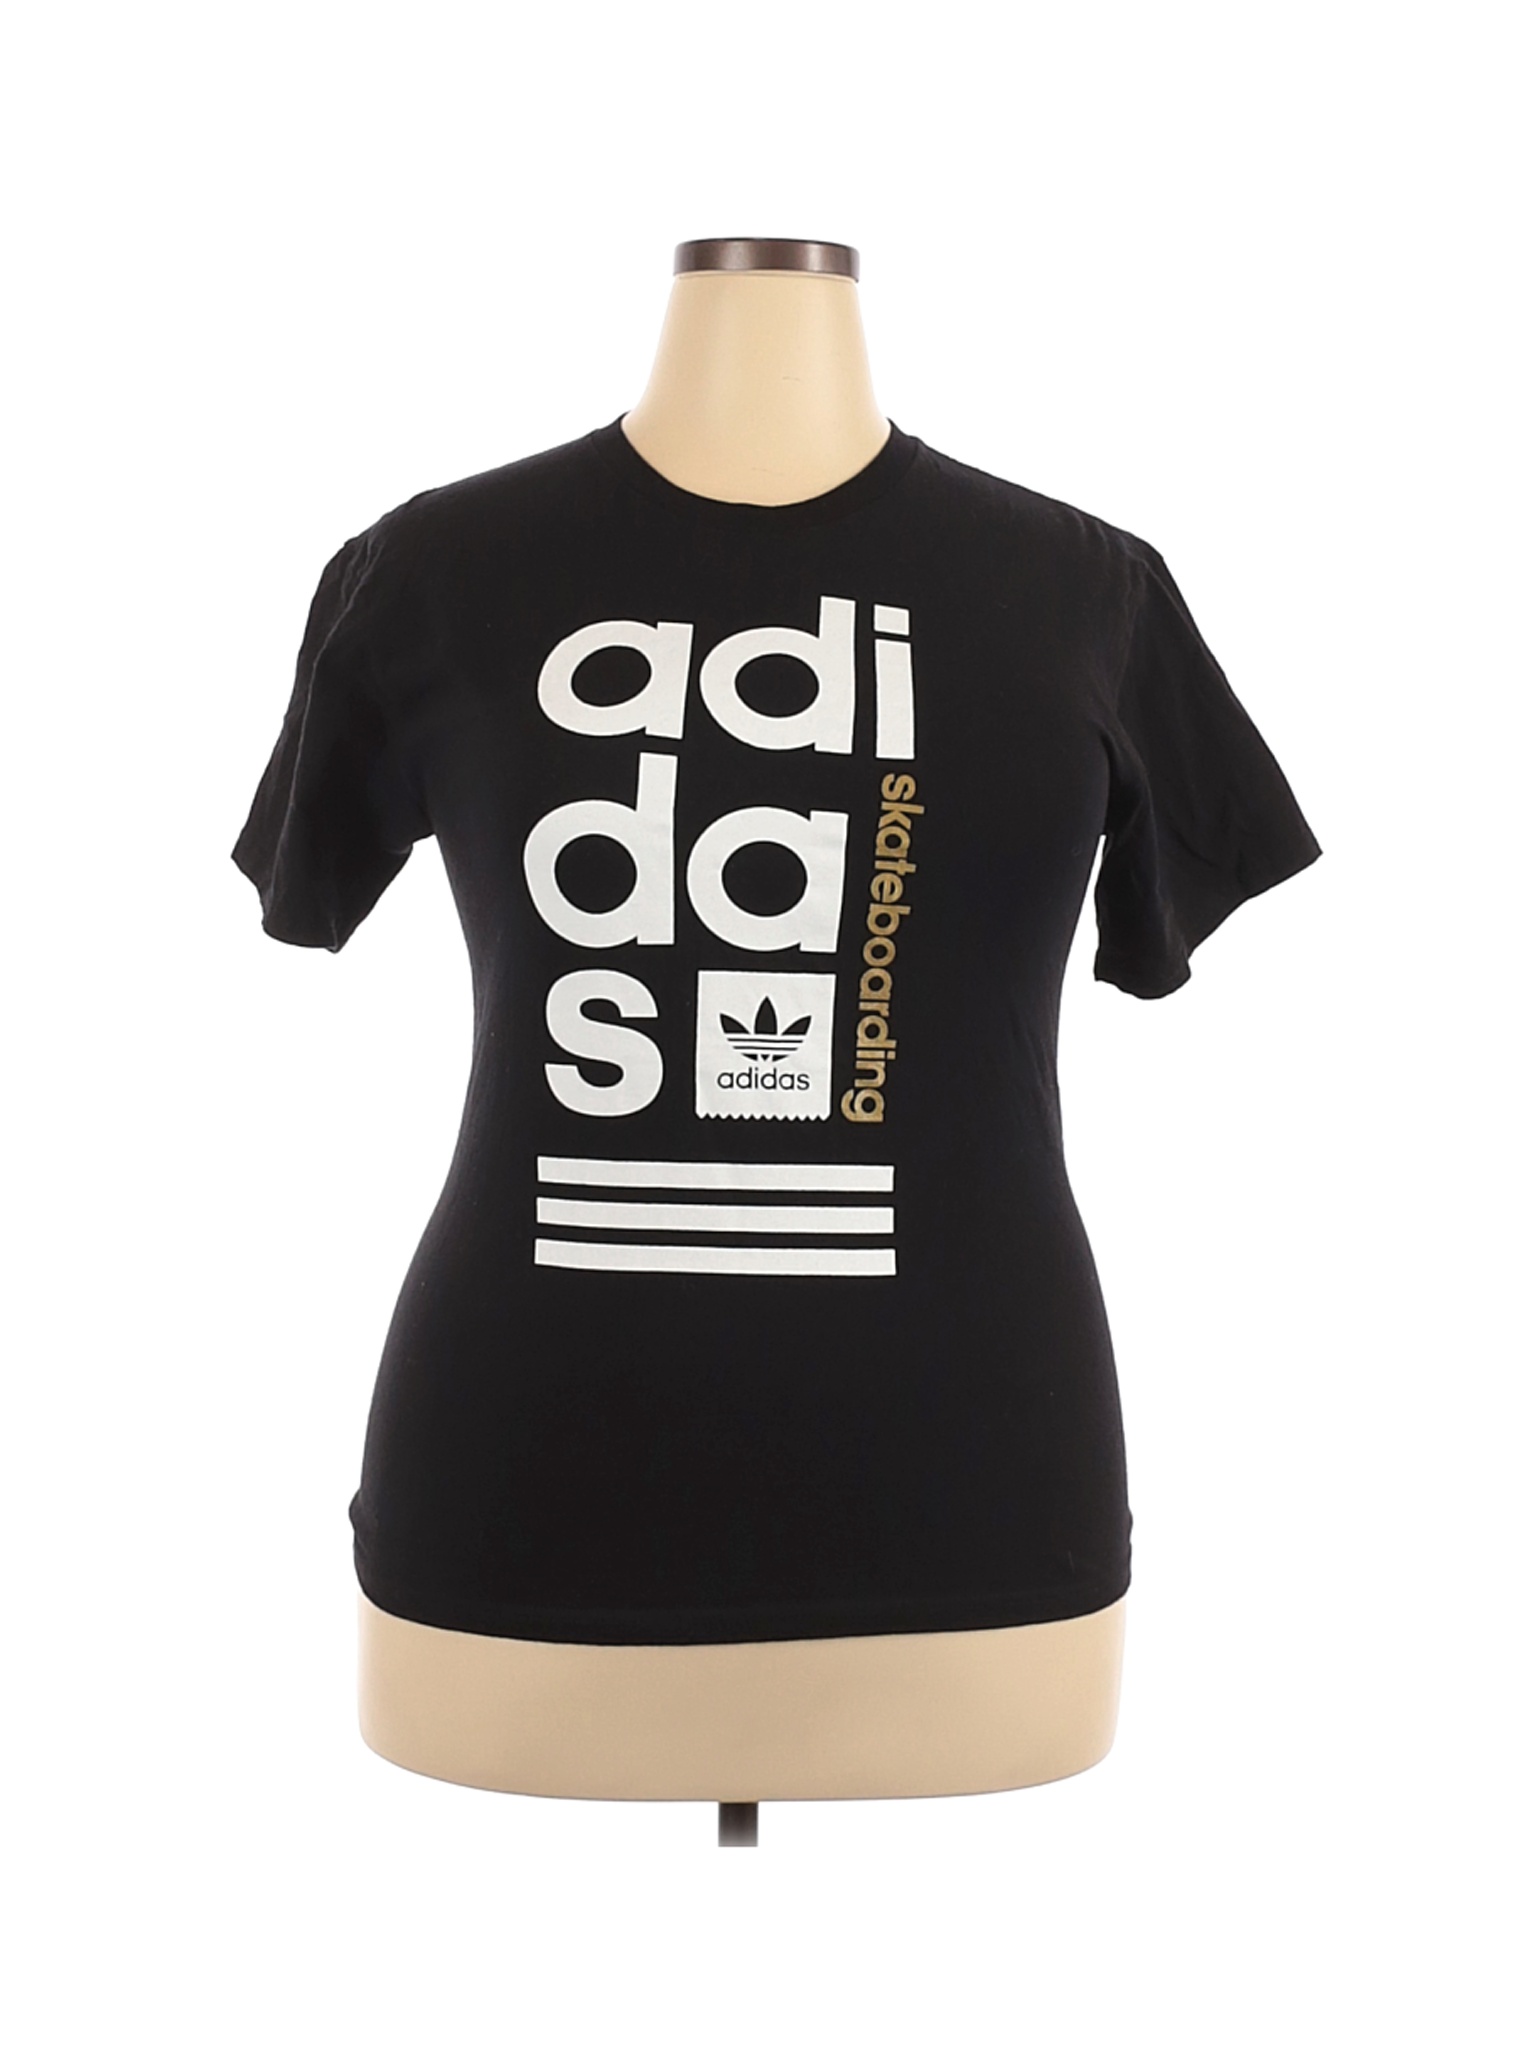 Adidas Women Black Short Sleeve T-Shirt XL | eBay